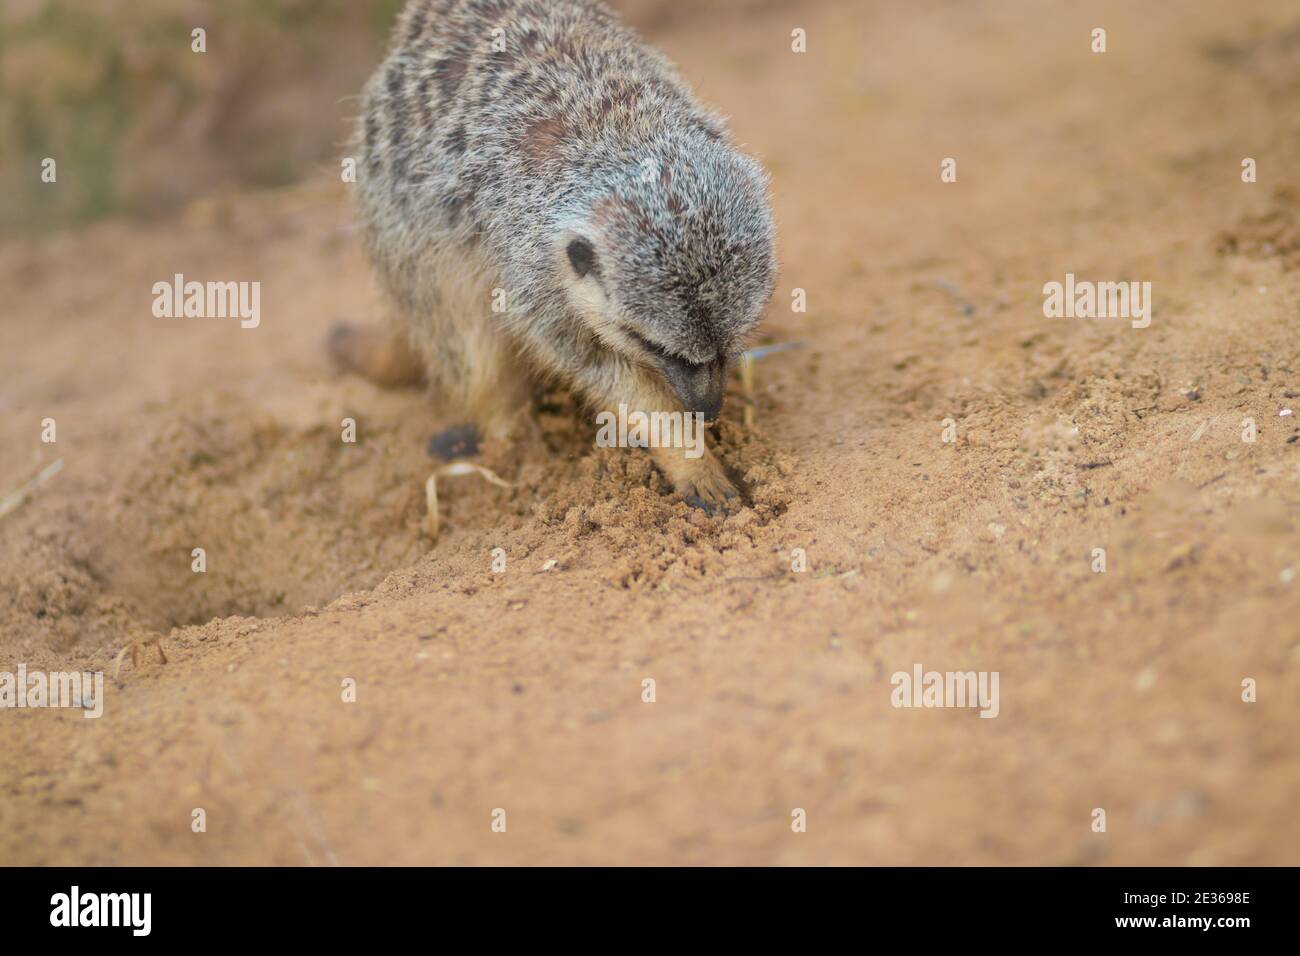 Surikata digs in desert sand to find food, blurred background Stock Photo